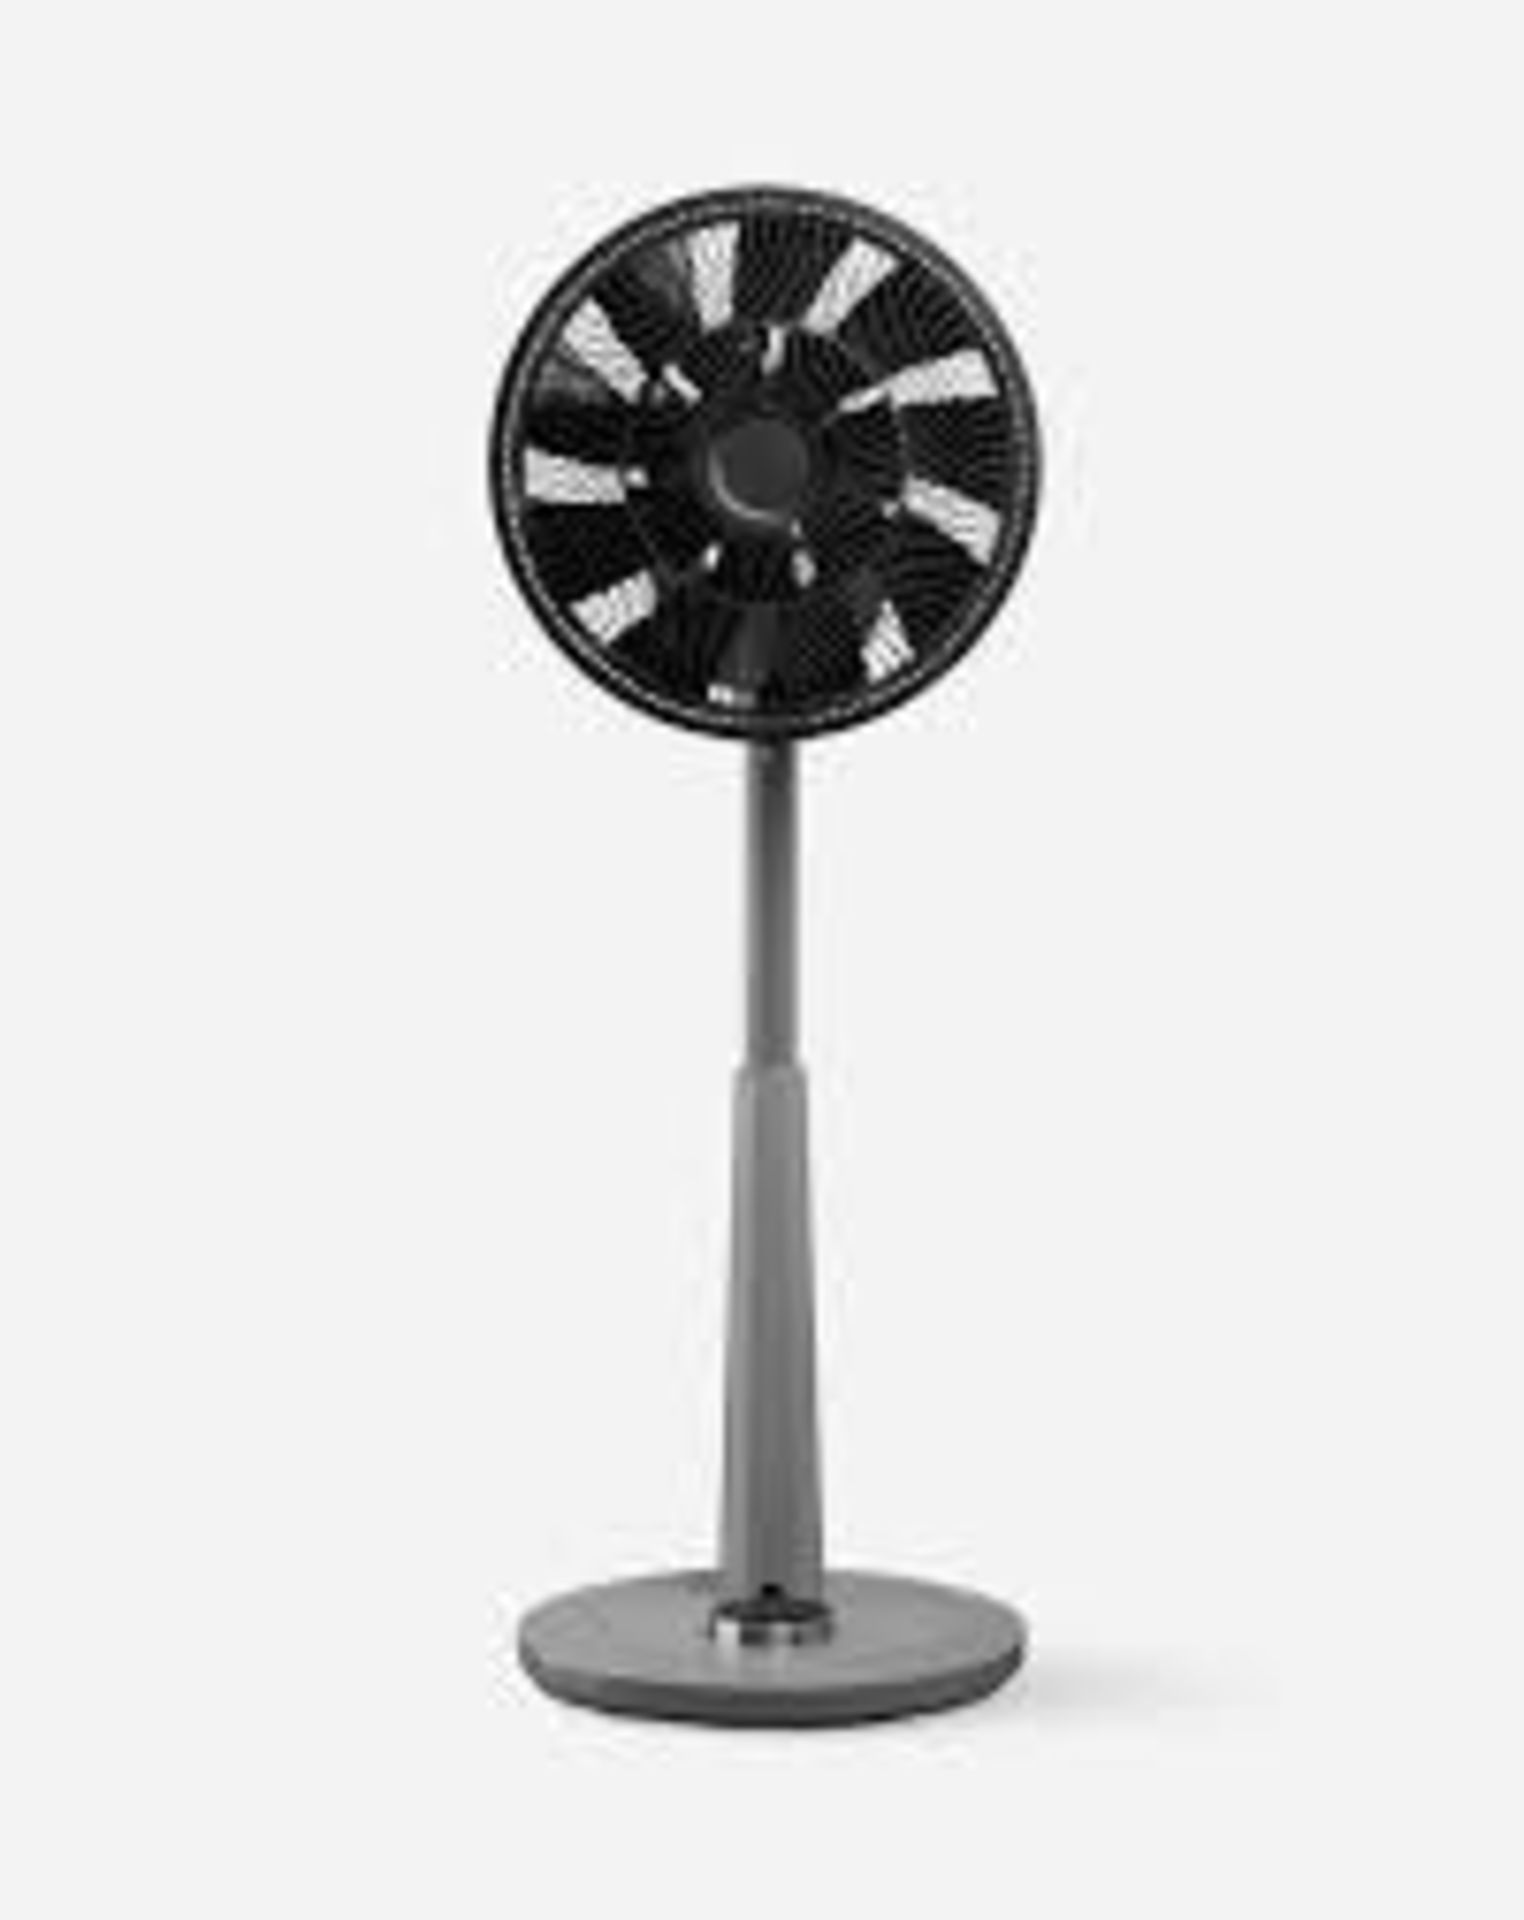 (REF118301) Duux Whisper Adjustable Grey Cooling Fan RRP 187.49